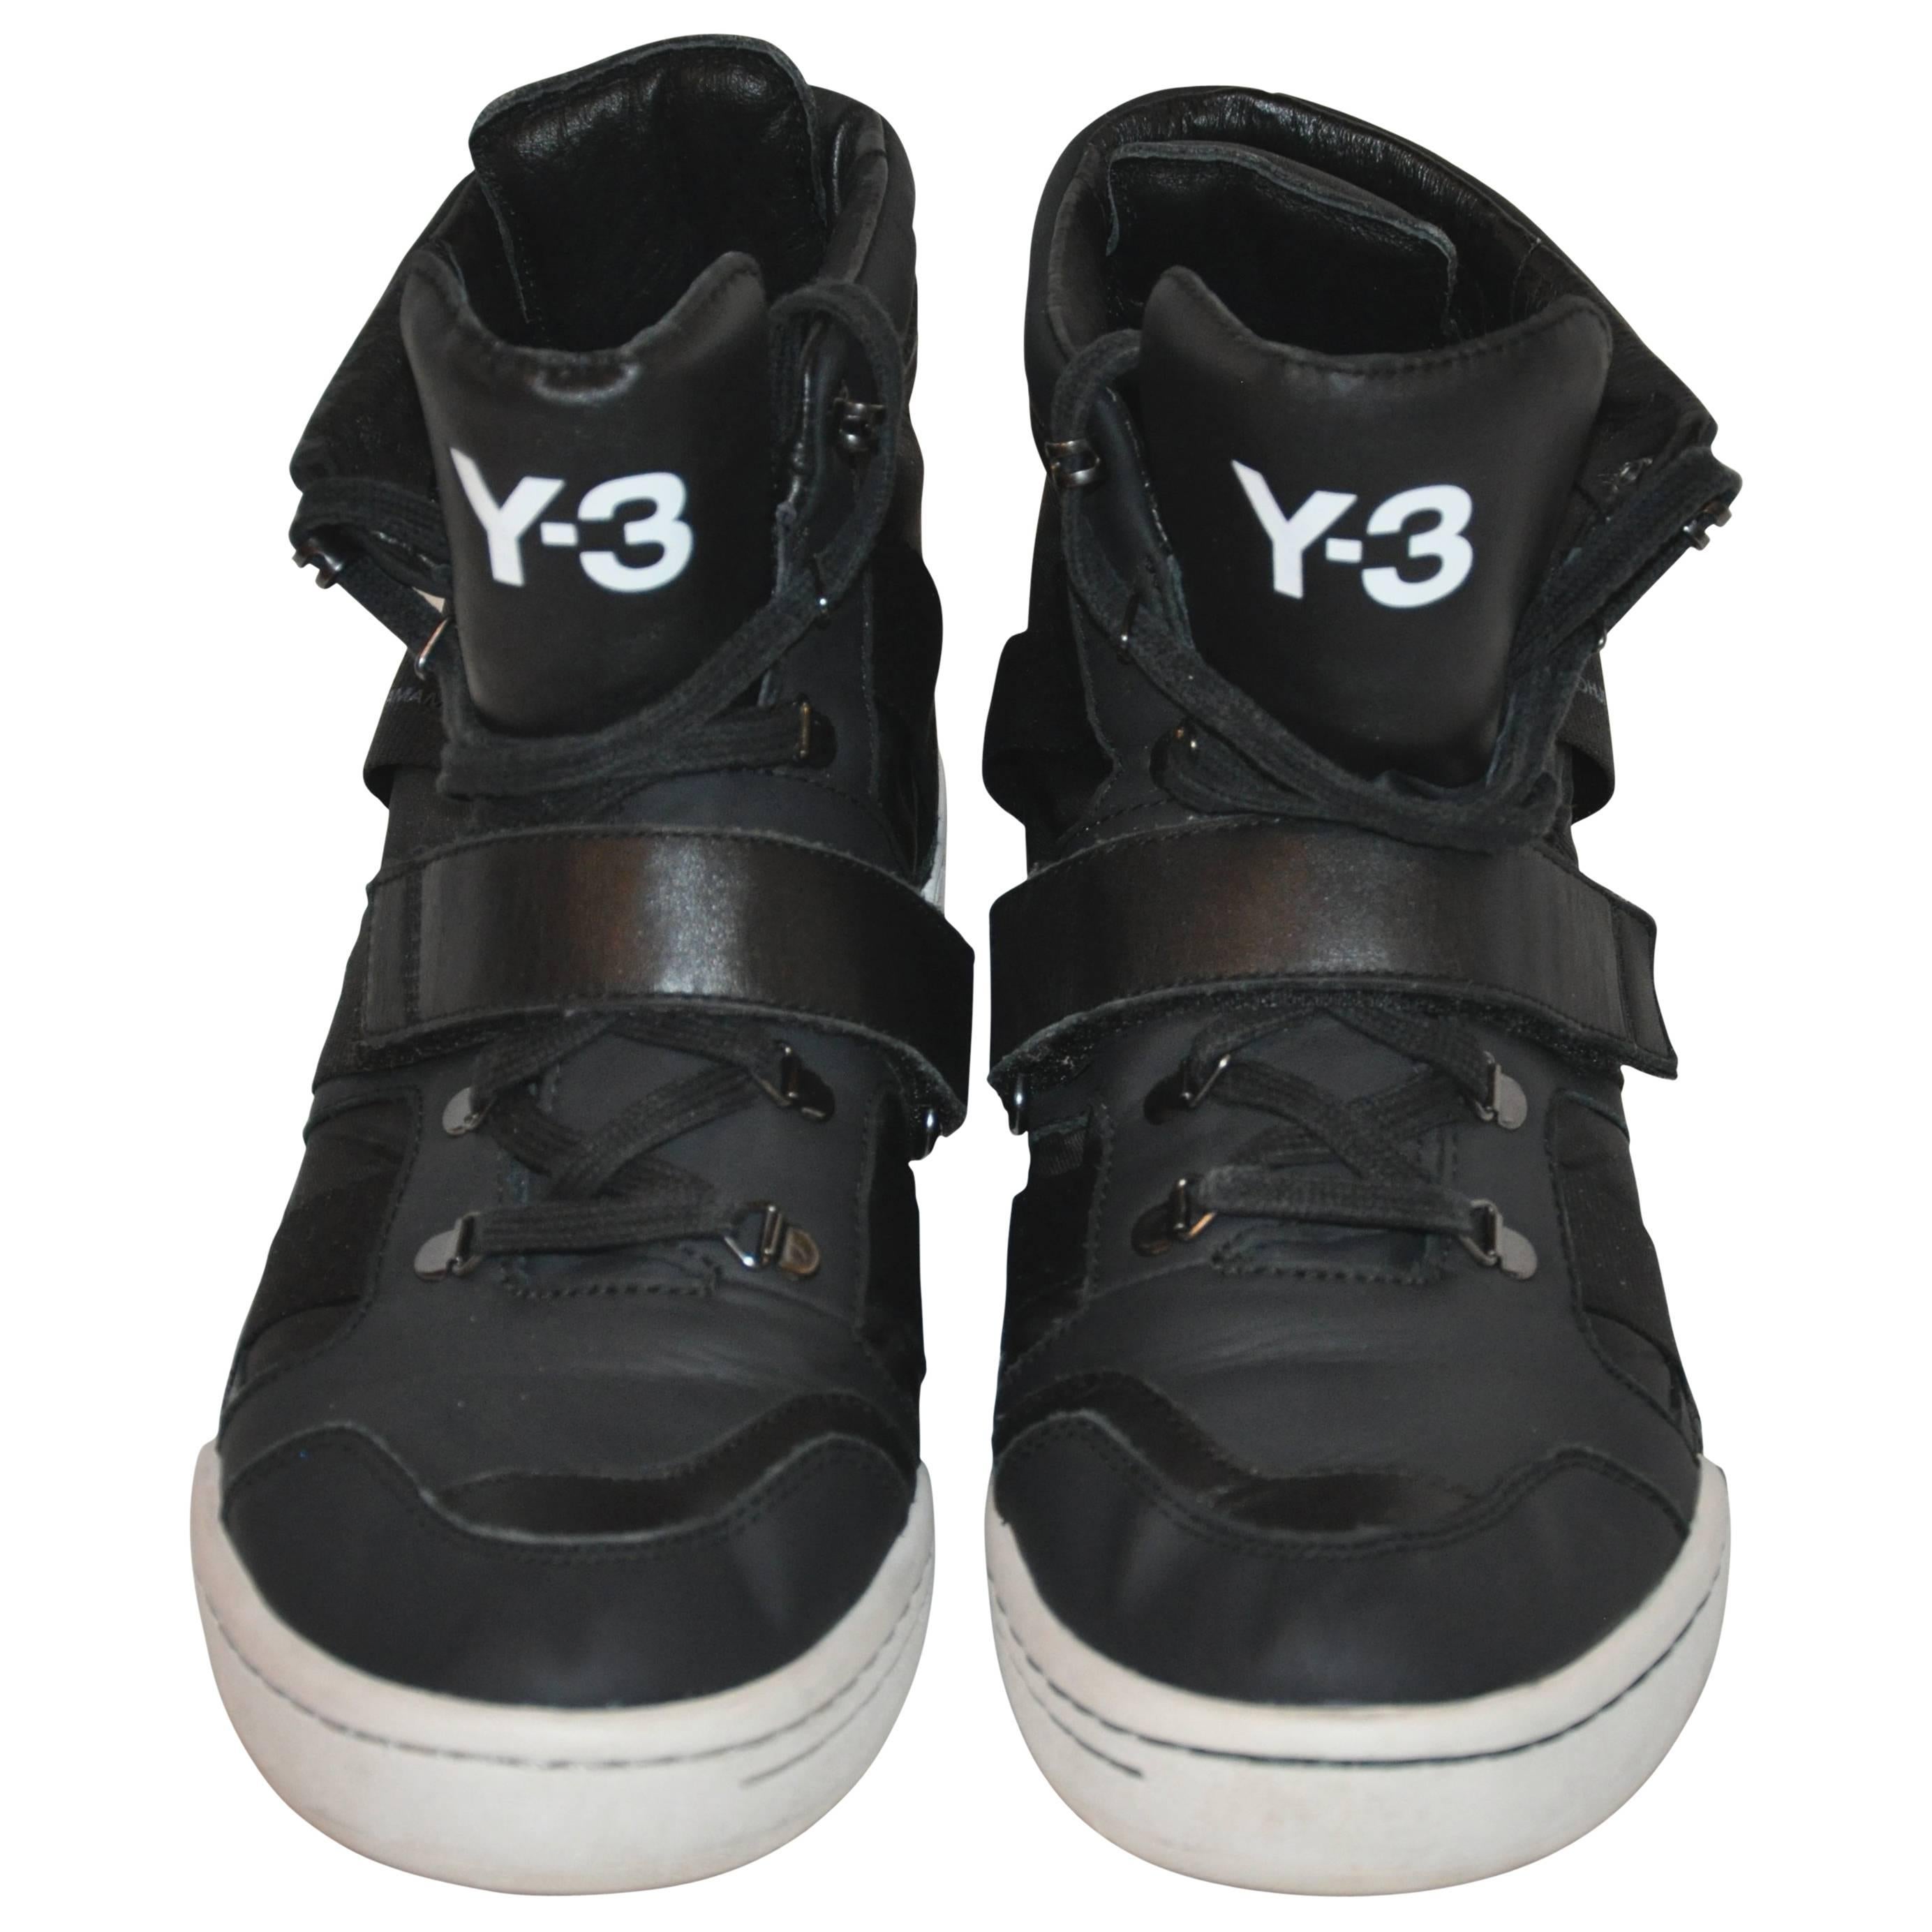 Yohji Yamamoto Schwarze High-Top-Sneakers mit Schnürung im Angebot